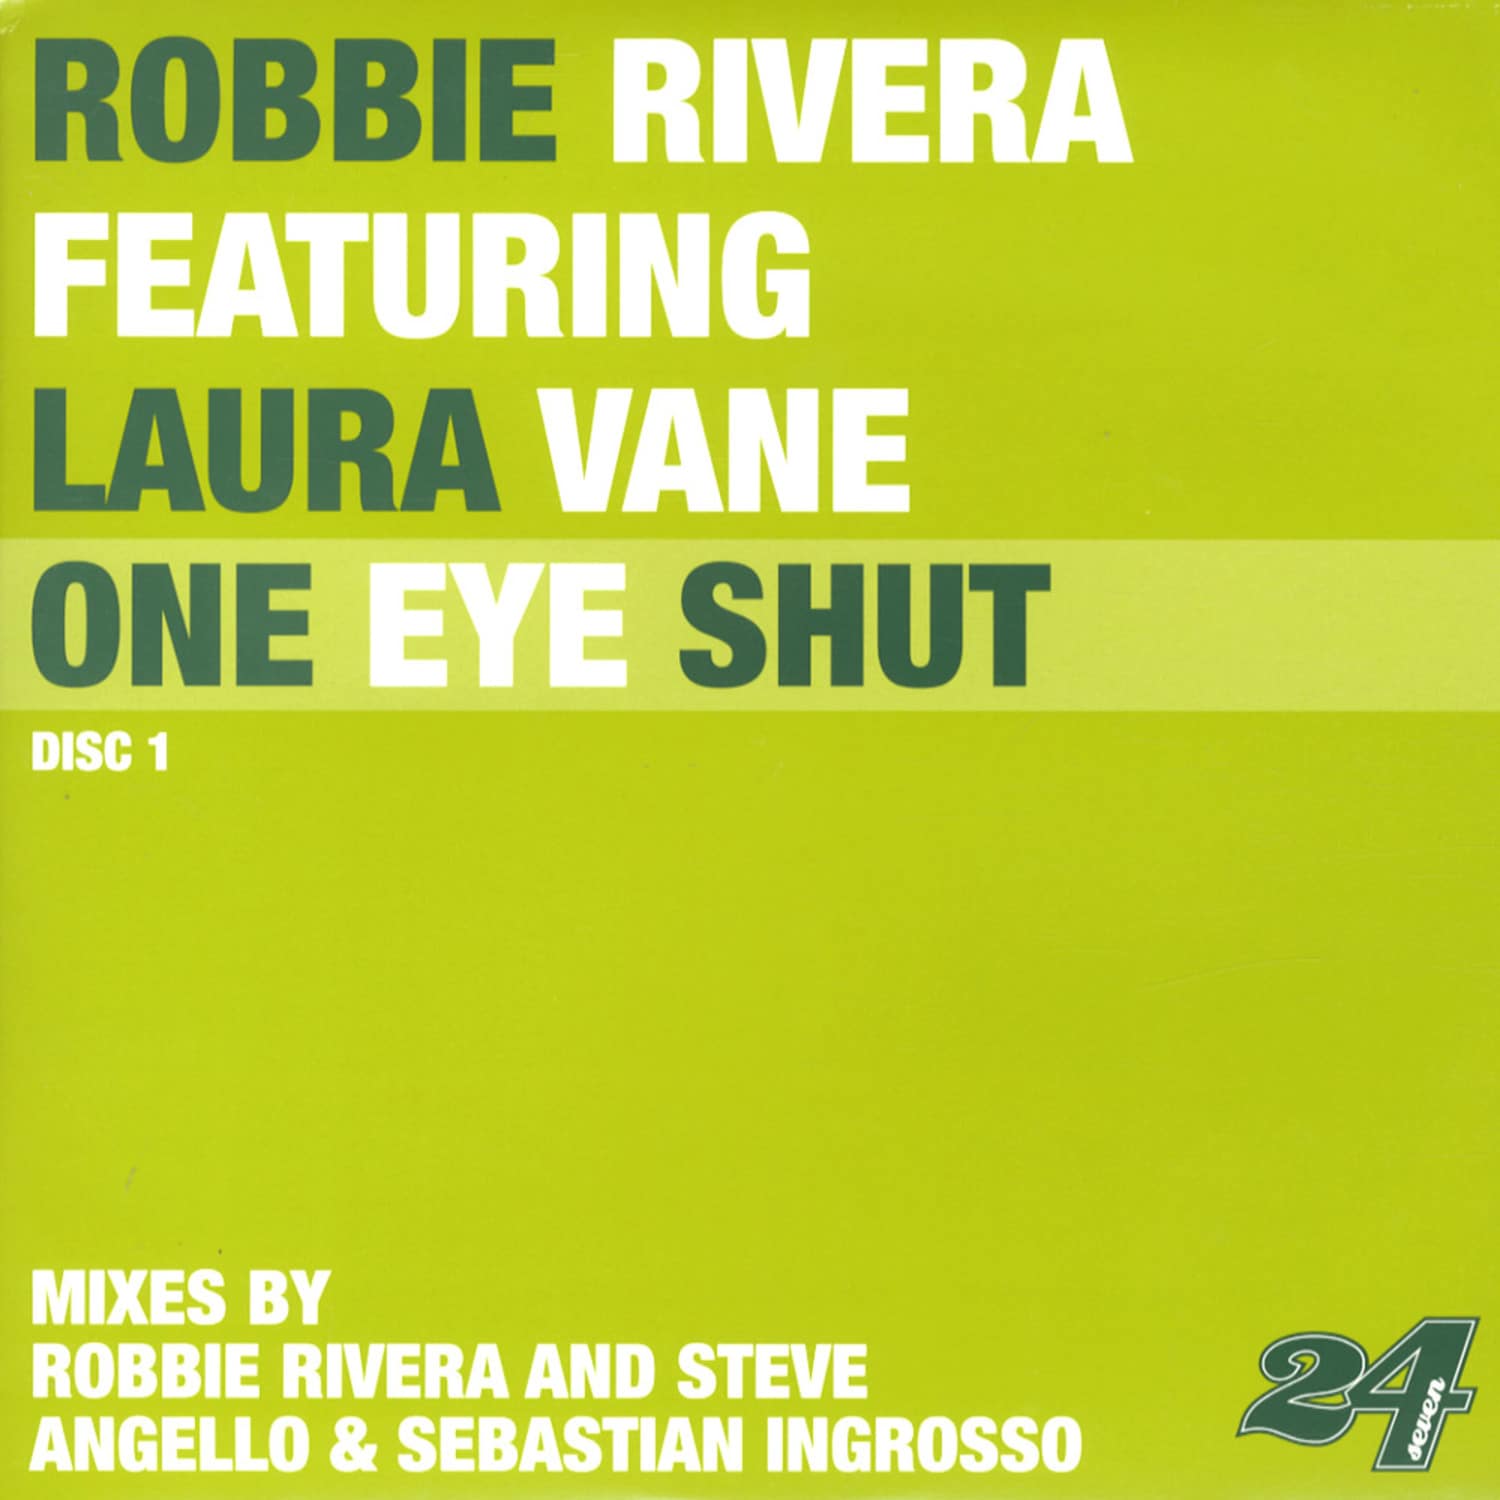 Robbie Rivera feat Laura Vane - ONE EYE SHUT disc 1